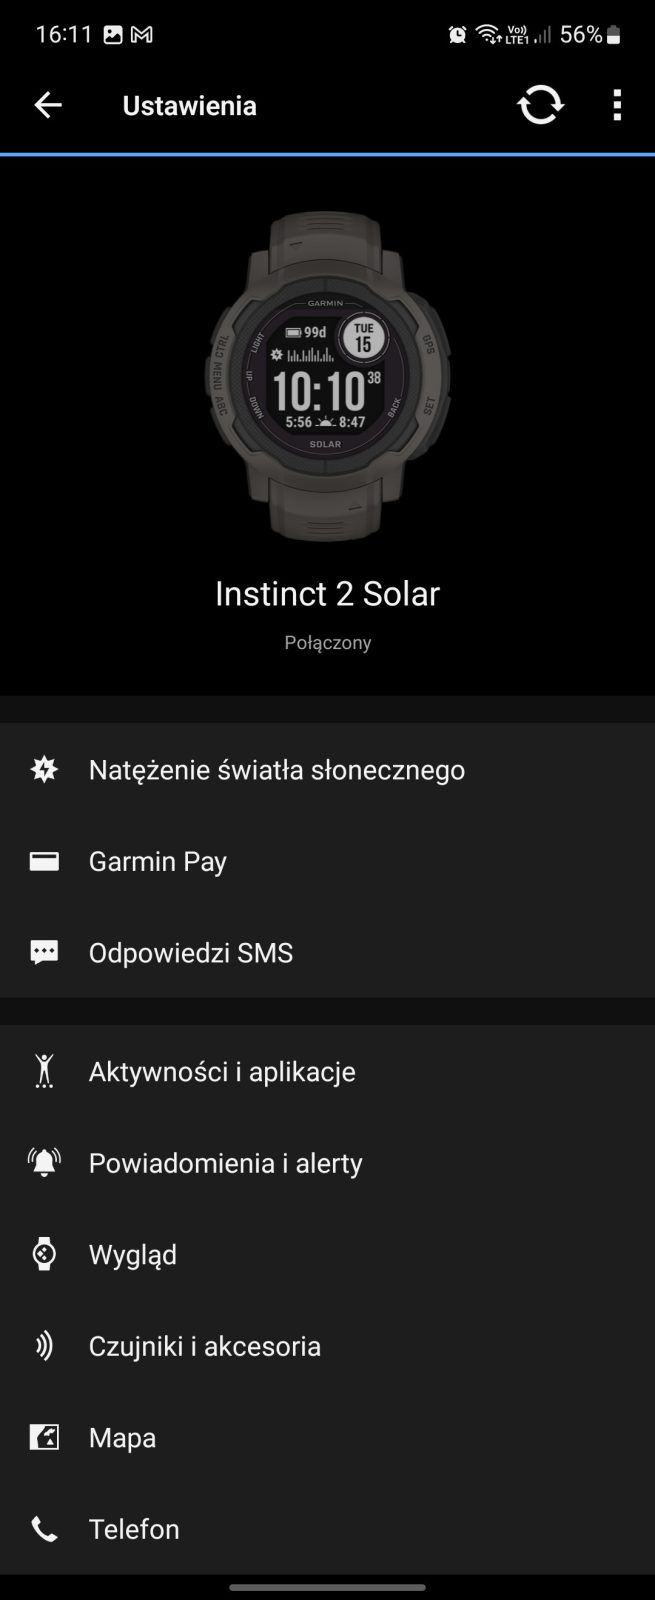 Recenzja Garmin Instinct 2 Solar. Doceni go nawet laik